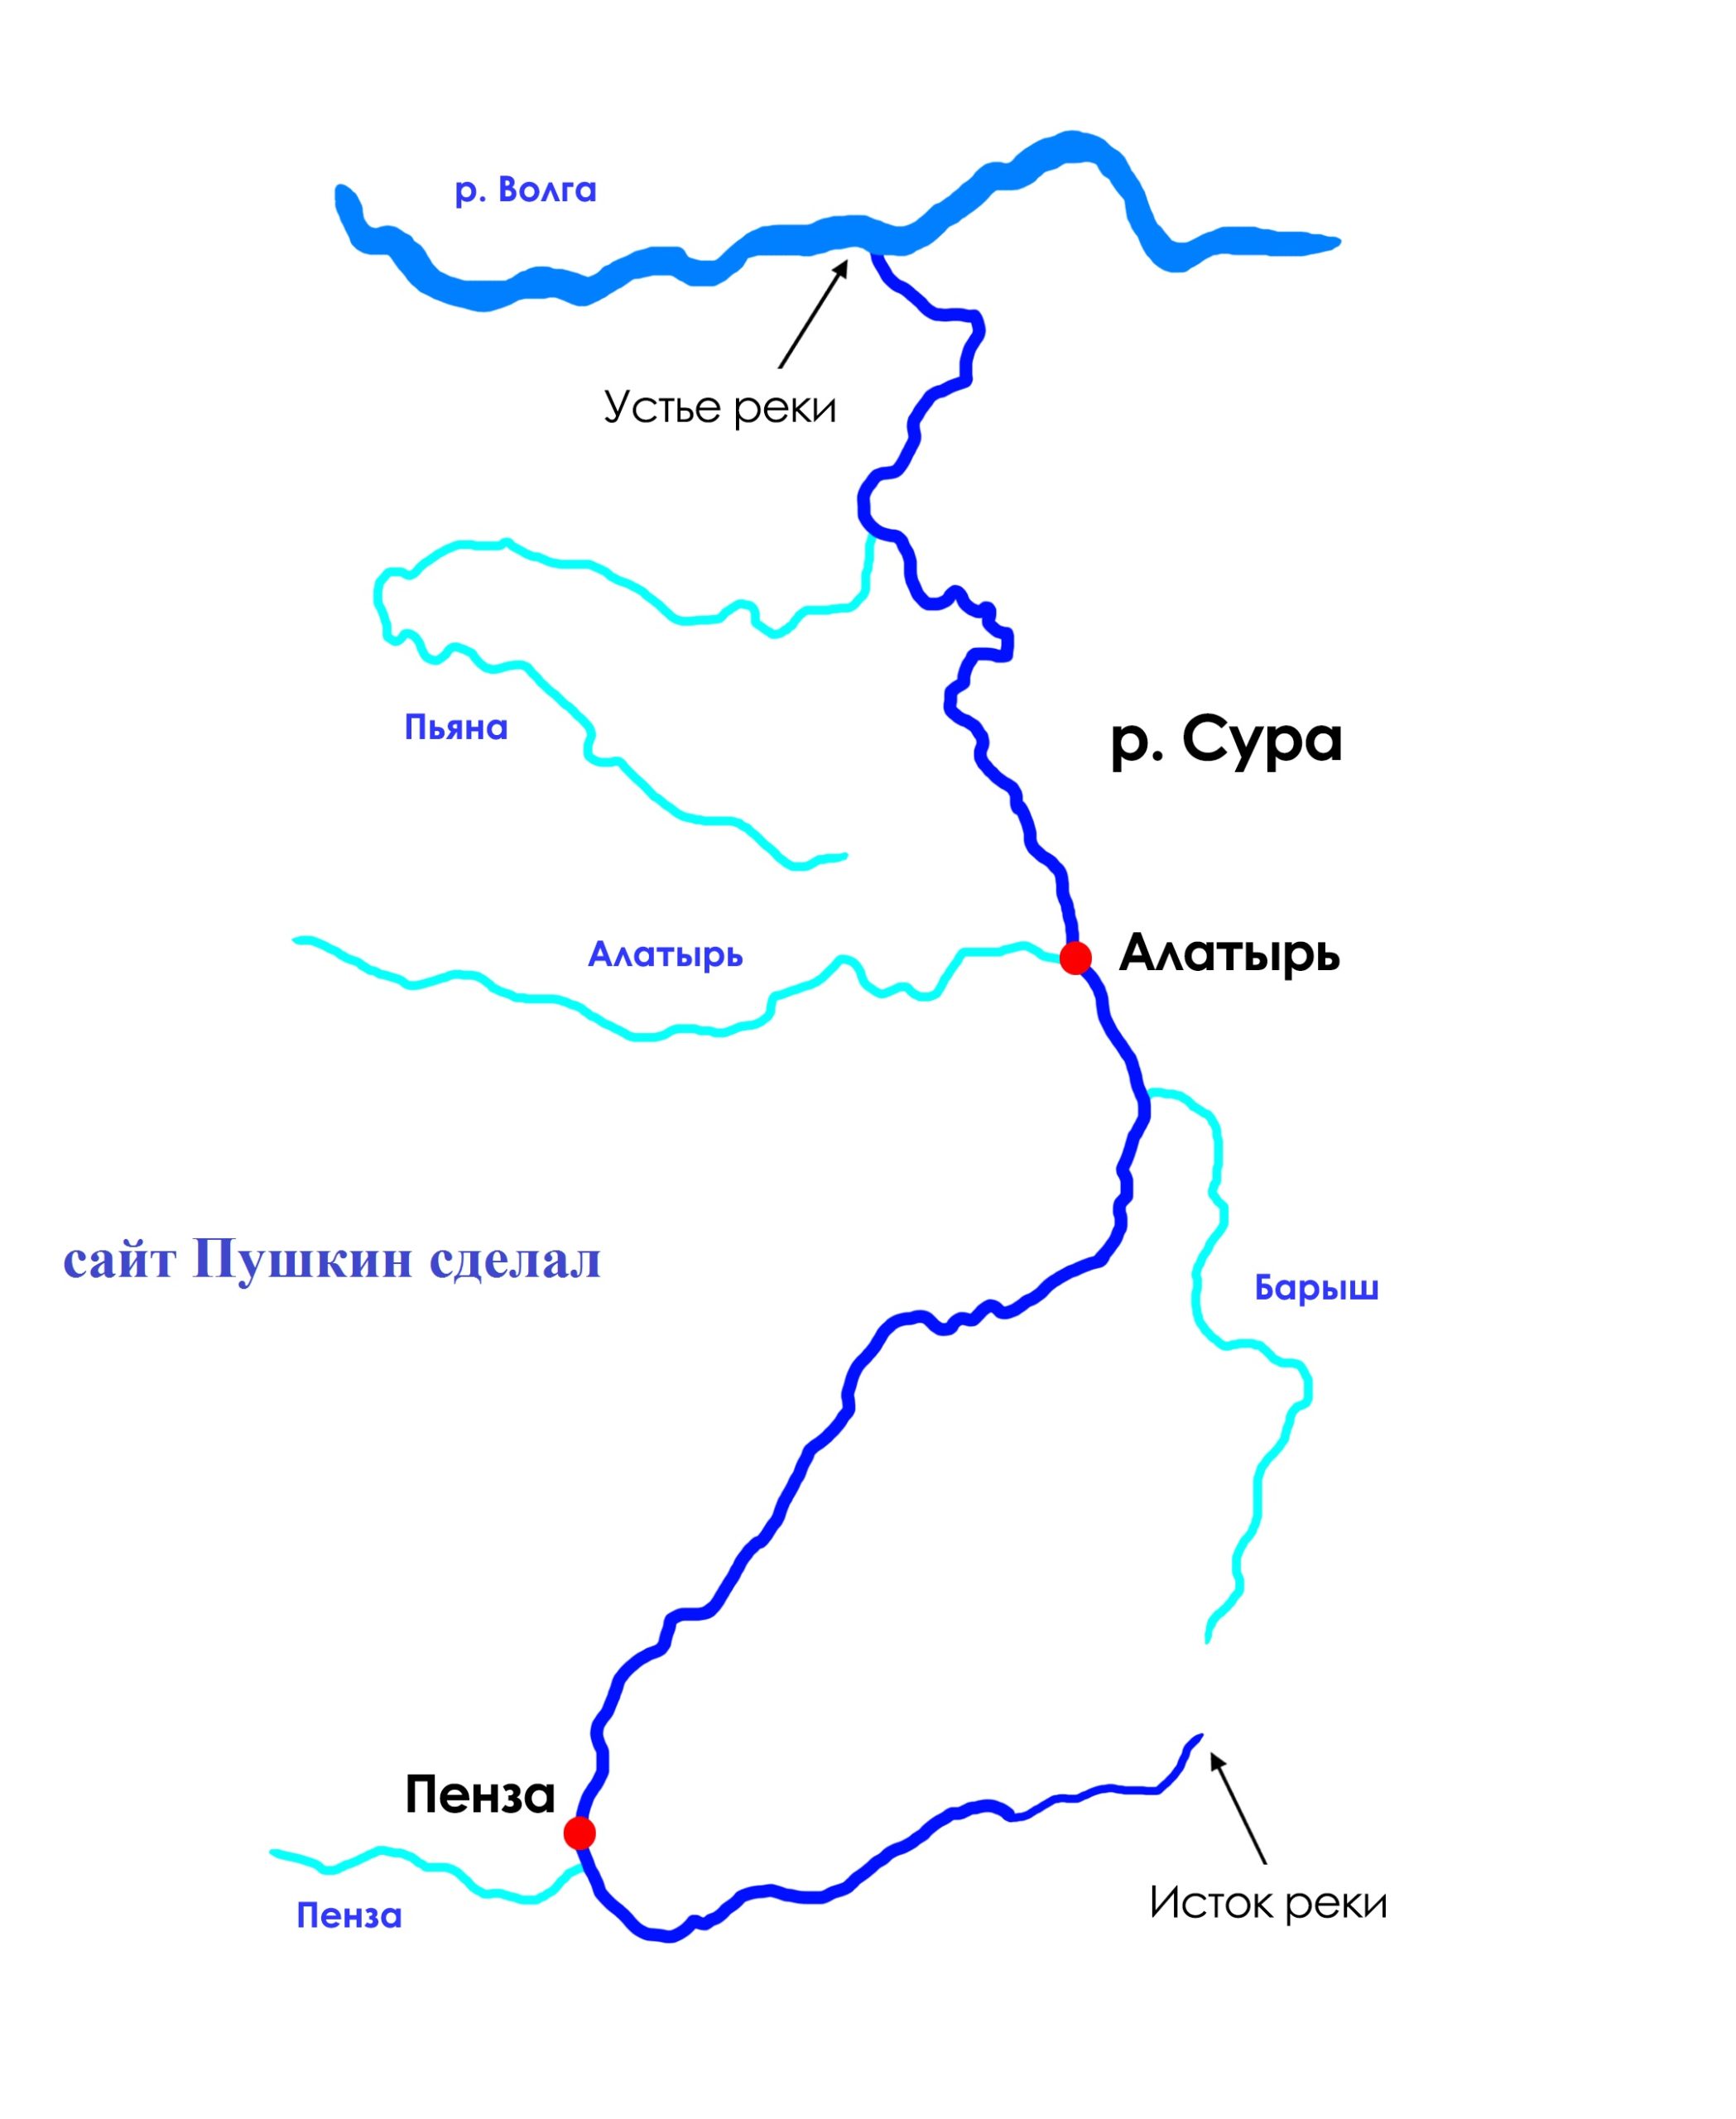 Река Пенза , приток Сура